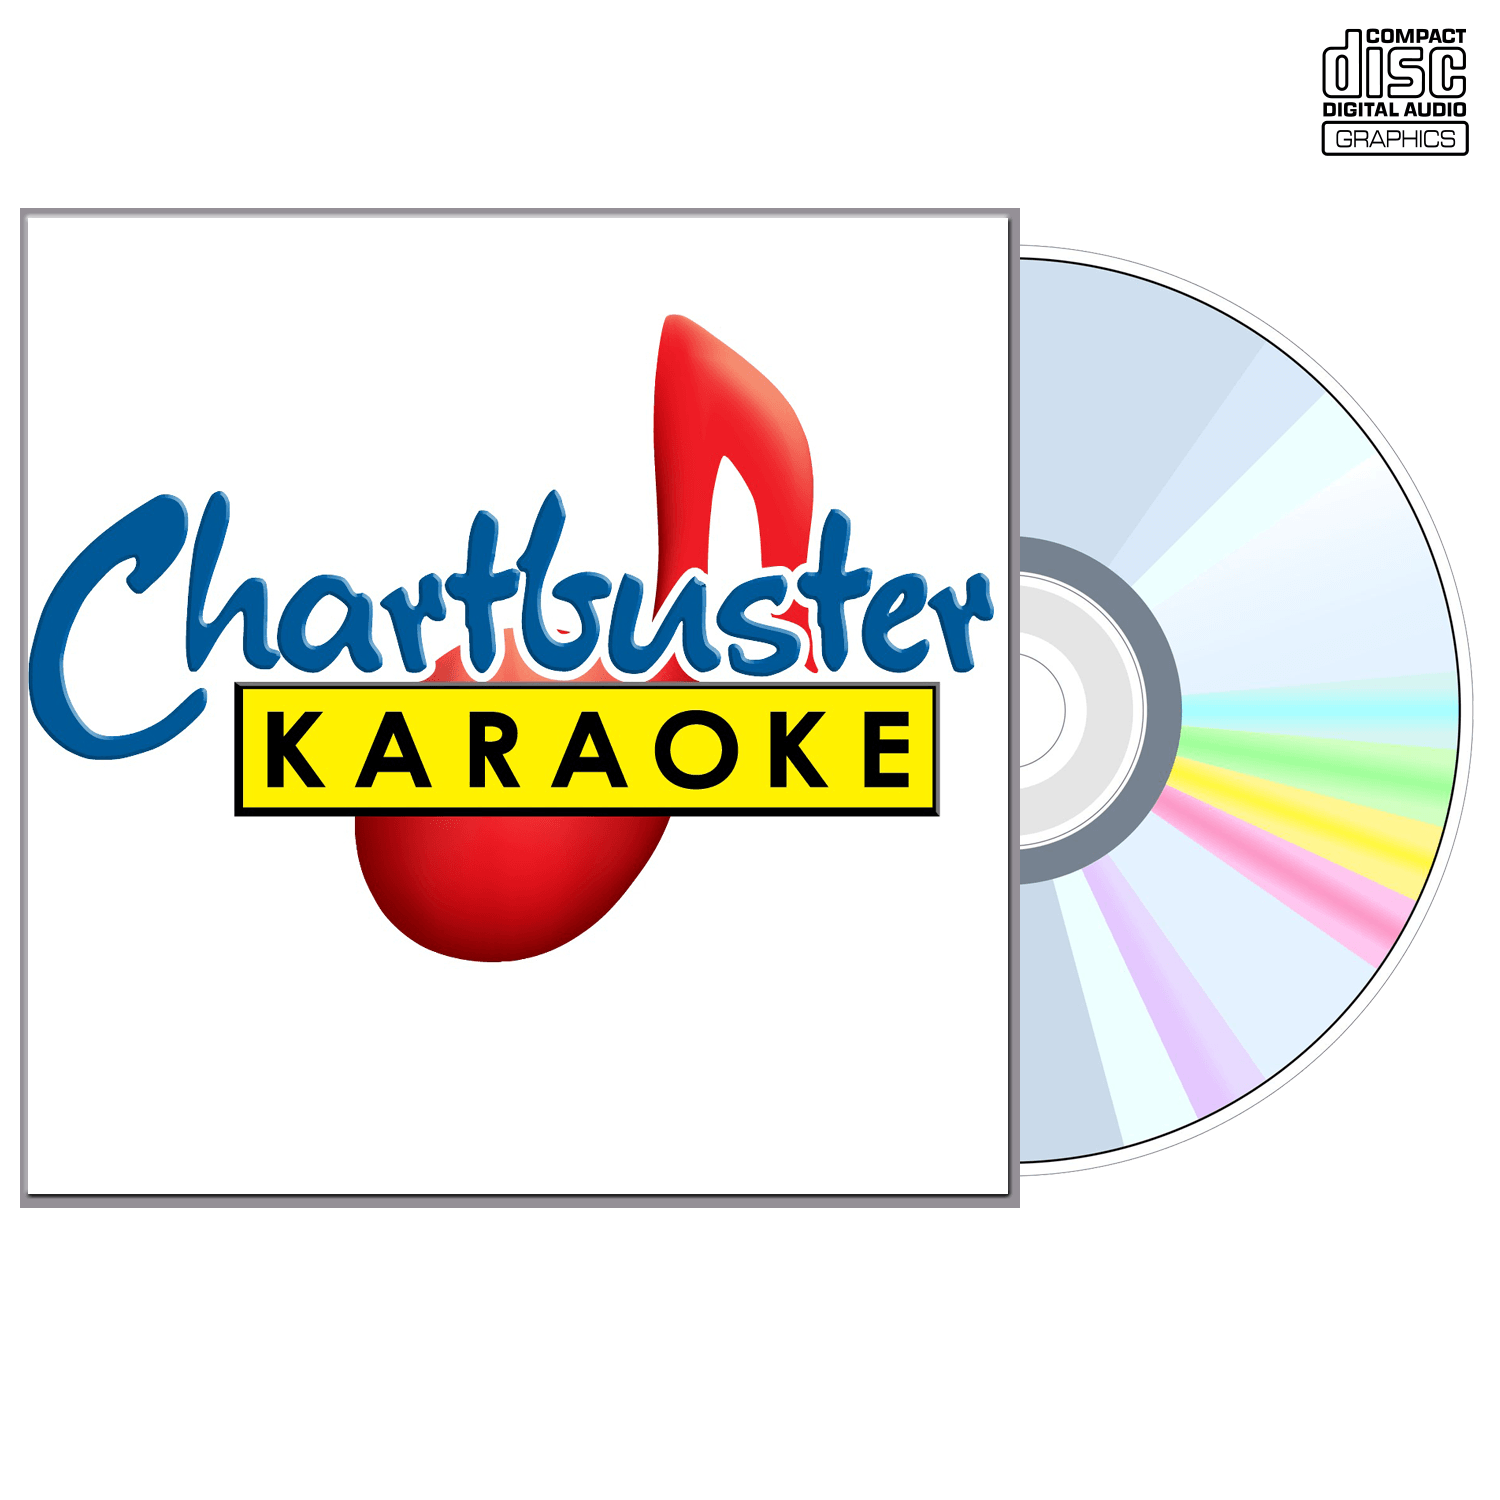 Charley Pride Vol 1 - CD+G - Chartbuster Karaoke - Karaoke Home Entertainment